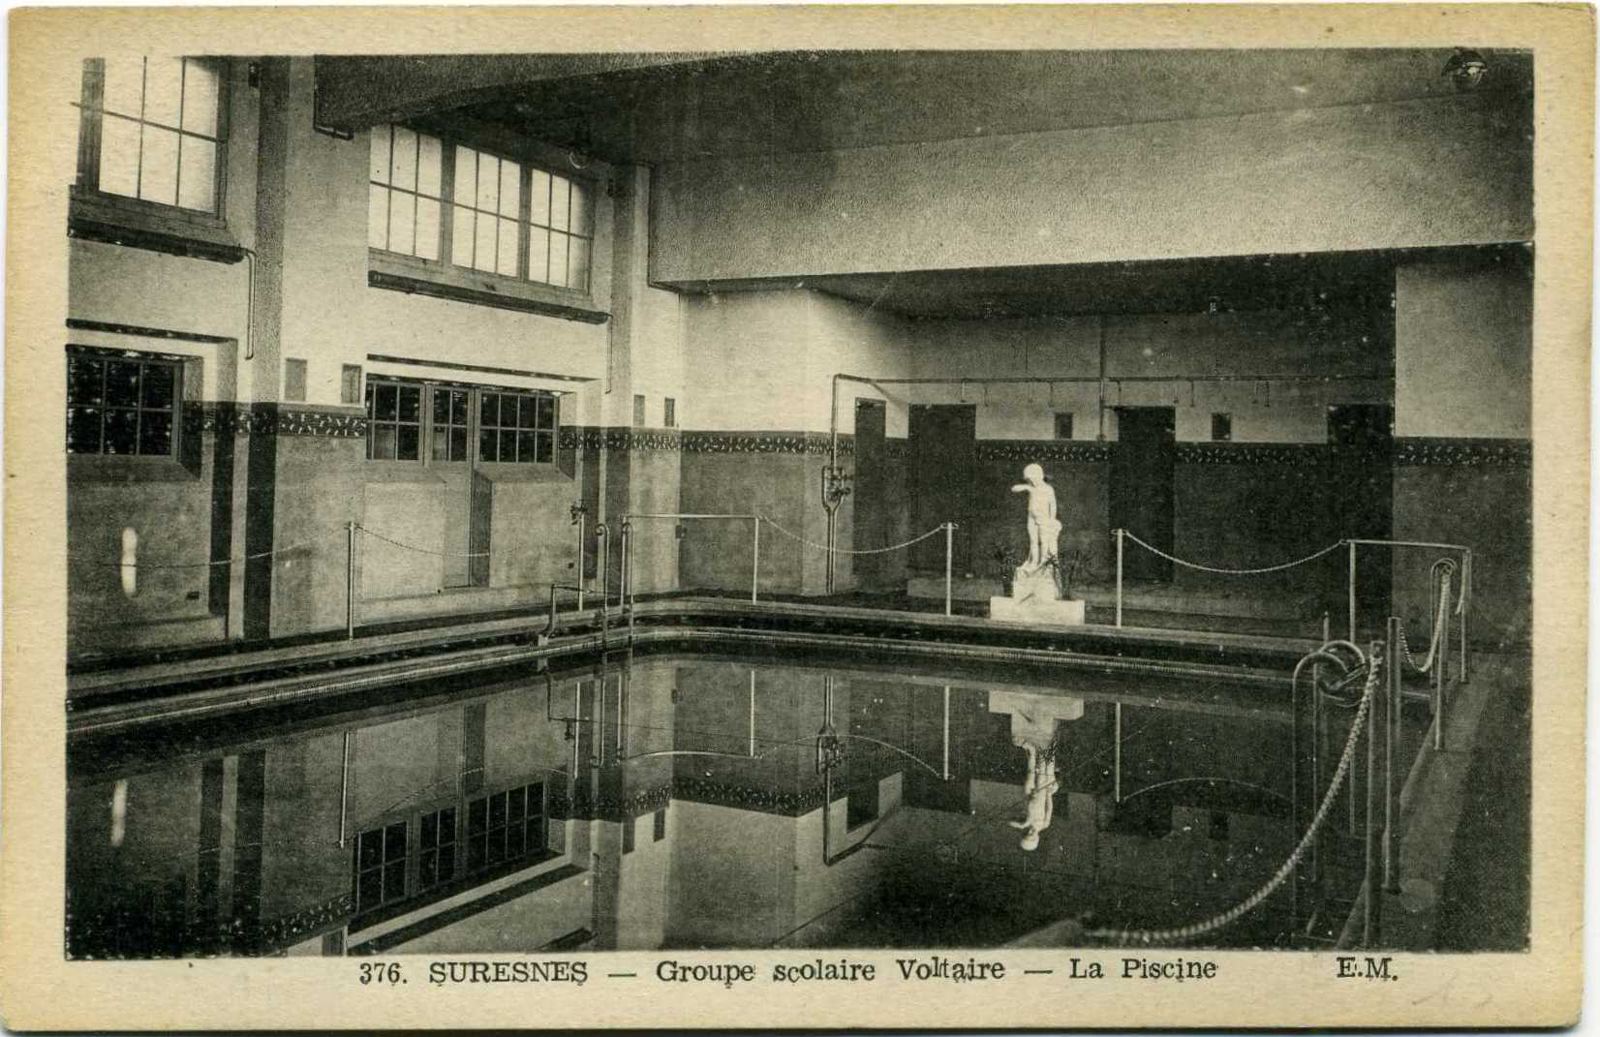 SURESNES - Groupe scolaire Voltaire - La Piscine